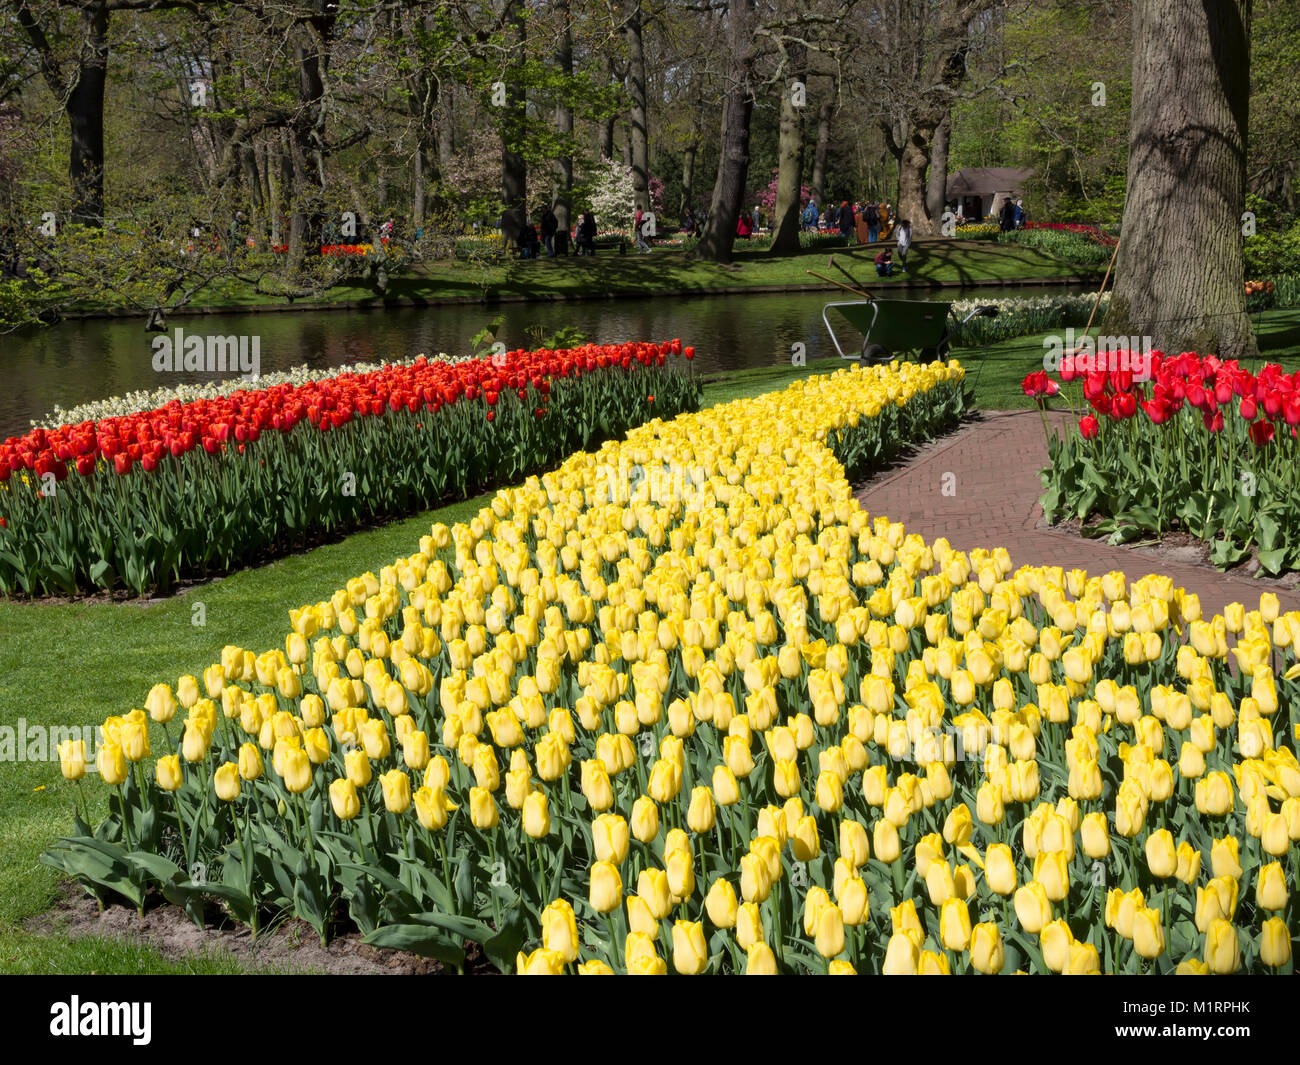 Mass plantings of tulips at Keukenhof Gardens Stock Photo